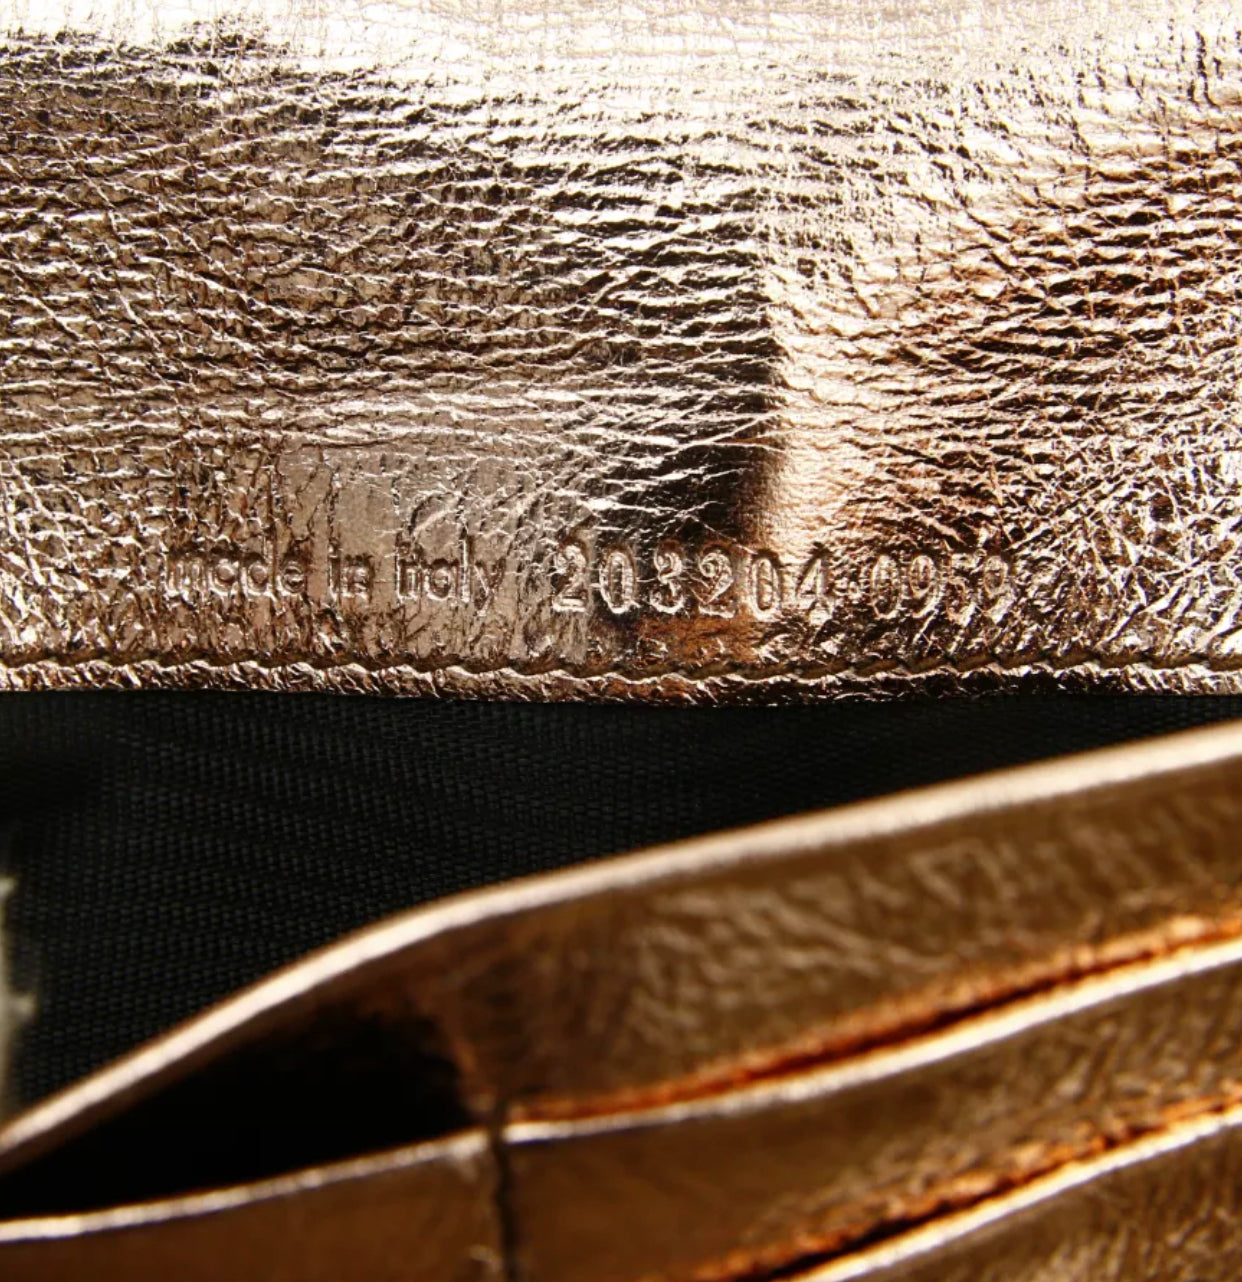 YSL Metallic Wallet Clutch